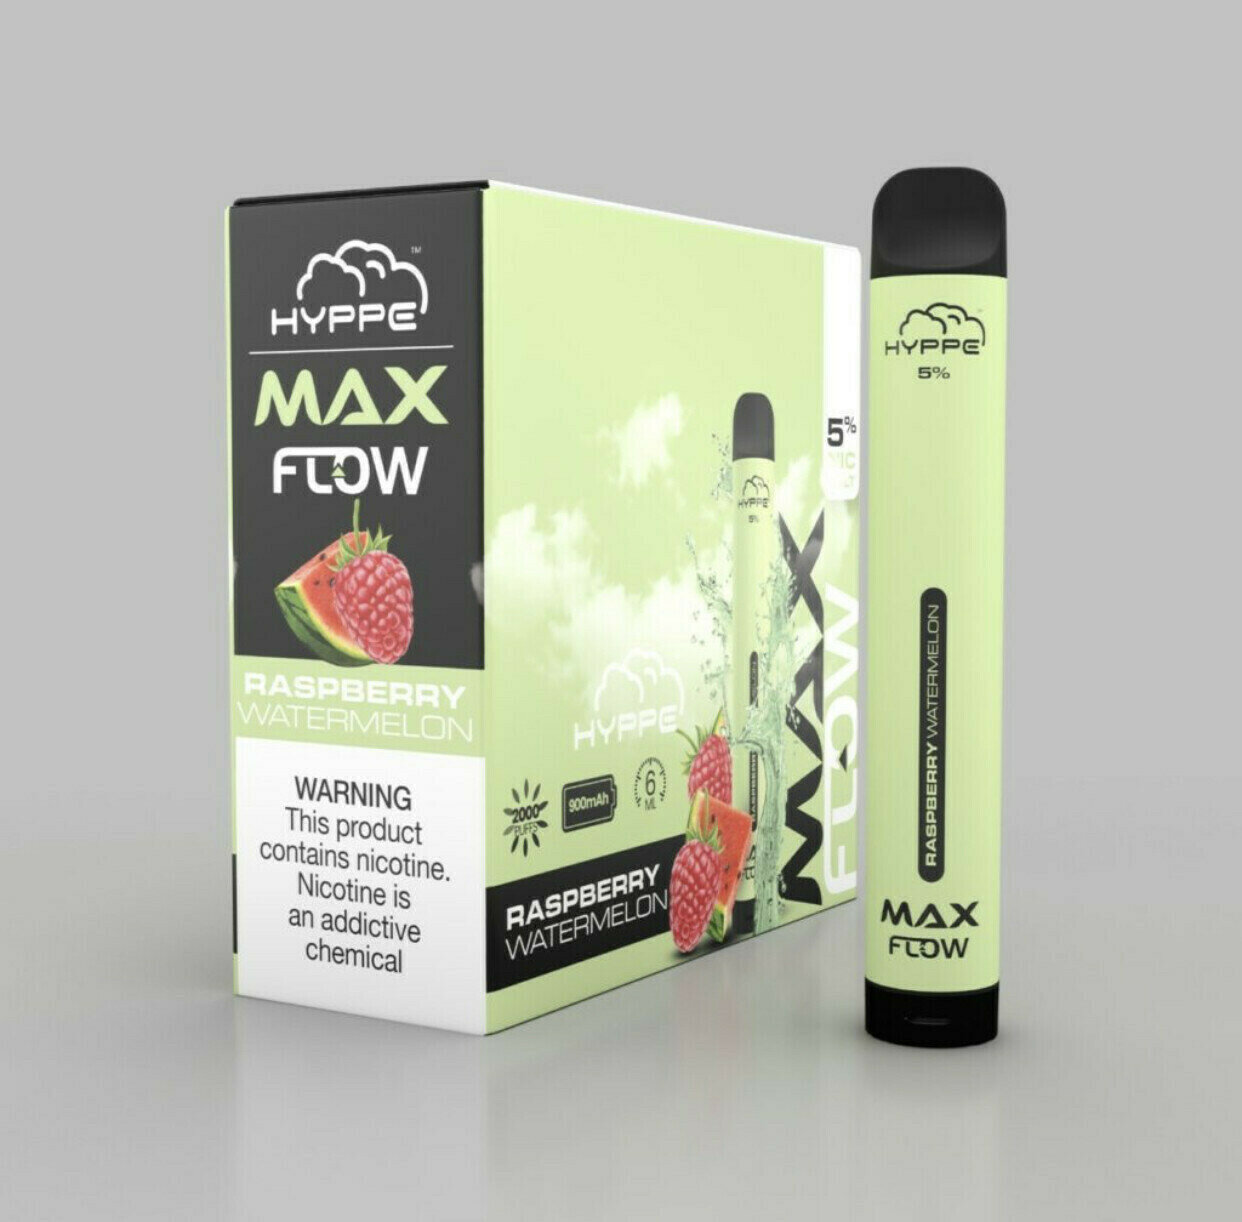 Hyppe Max Flow 5% Raspberry Watermelon